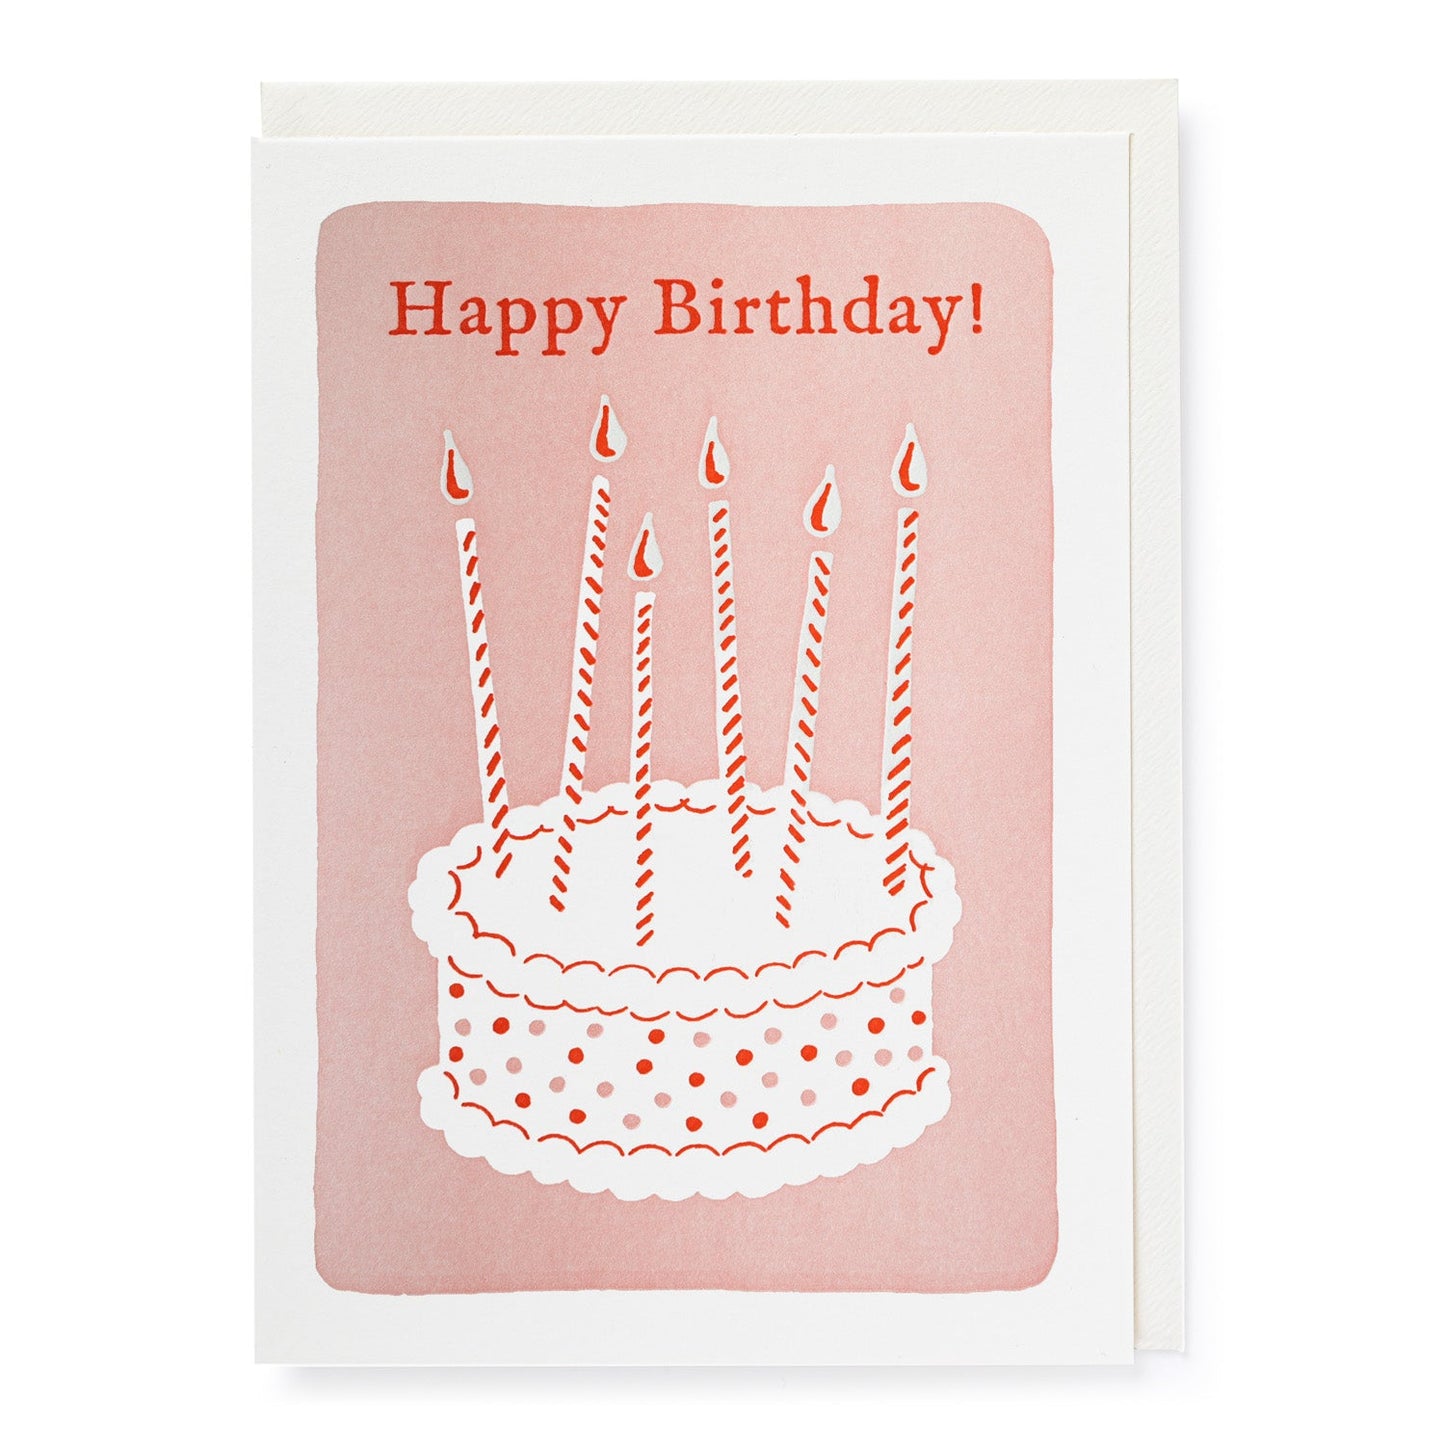 Archivist Gallery Birthday Cake Card 